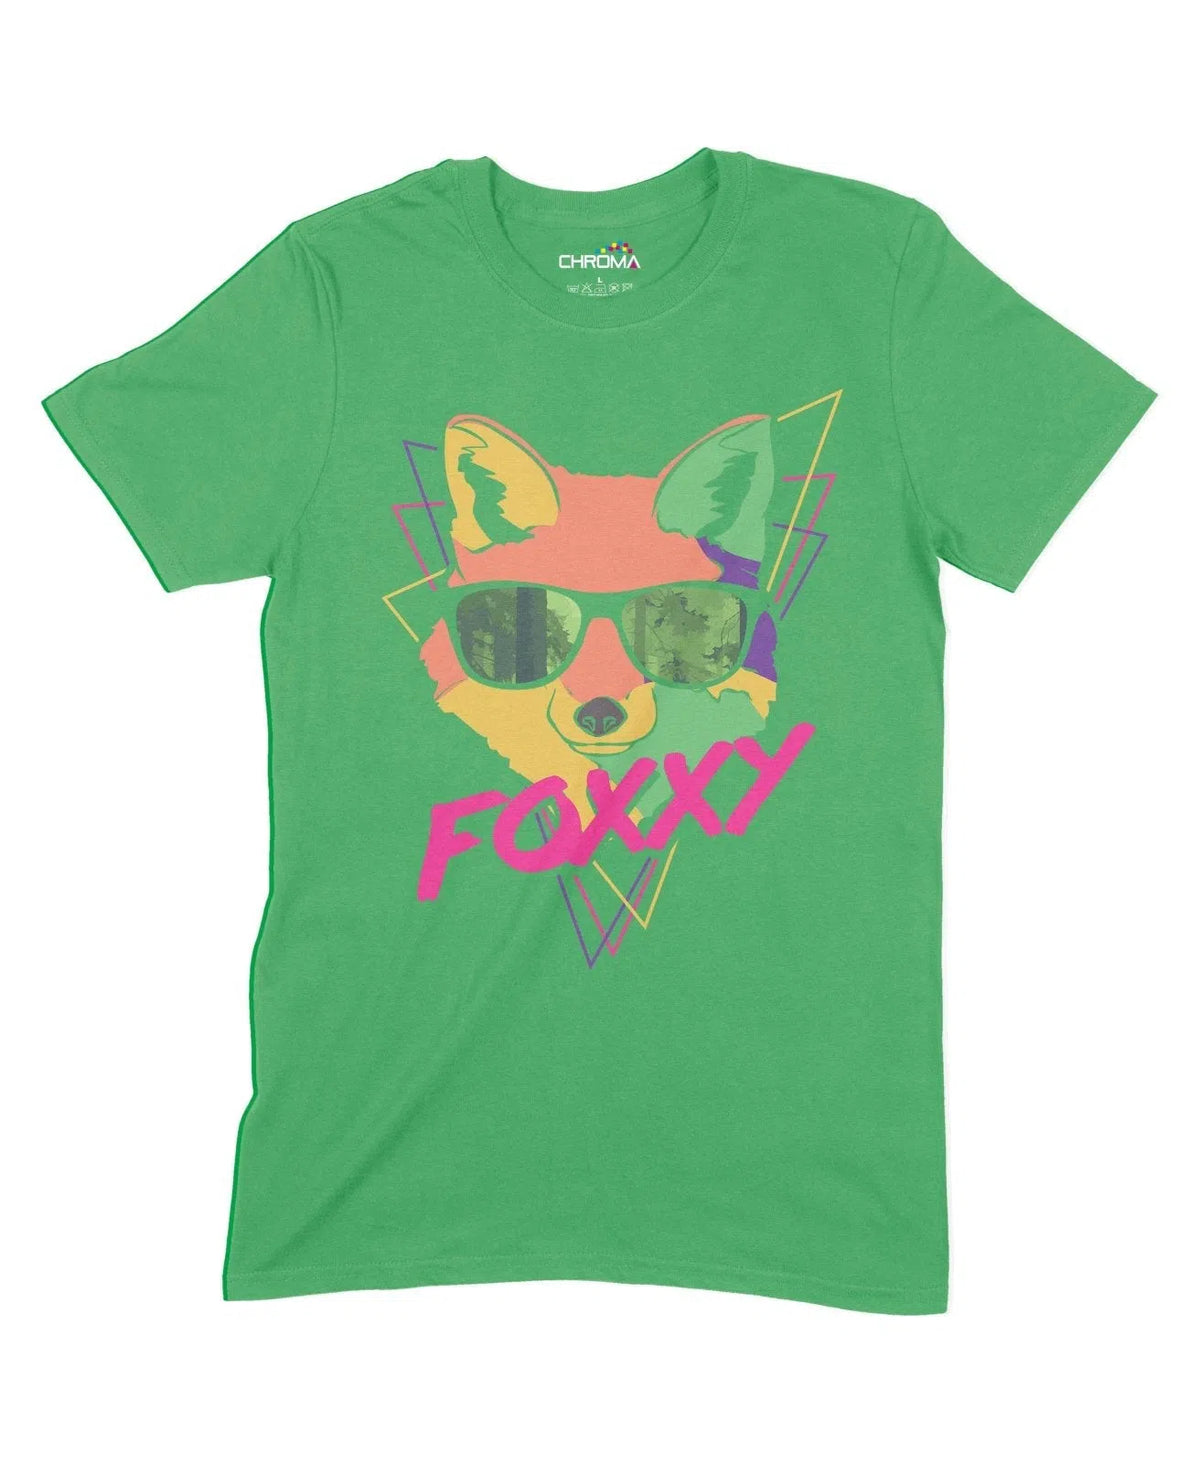 Foxxy Cool Retro Unisex Adult T-Shirt | Premium Quality Streetwear Chroma Clothing